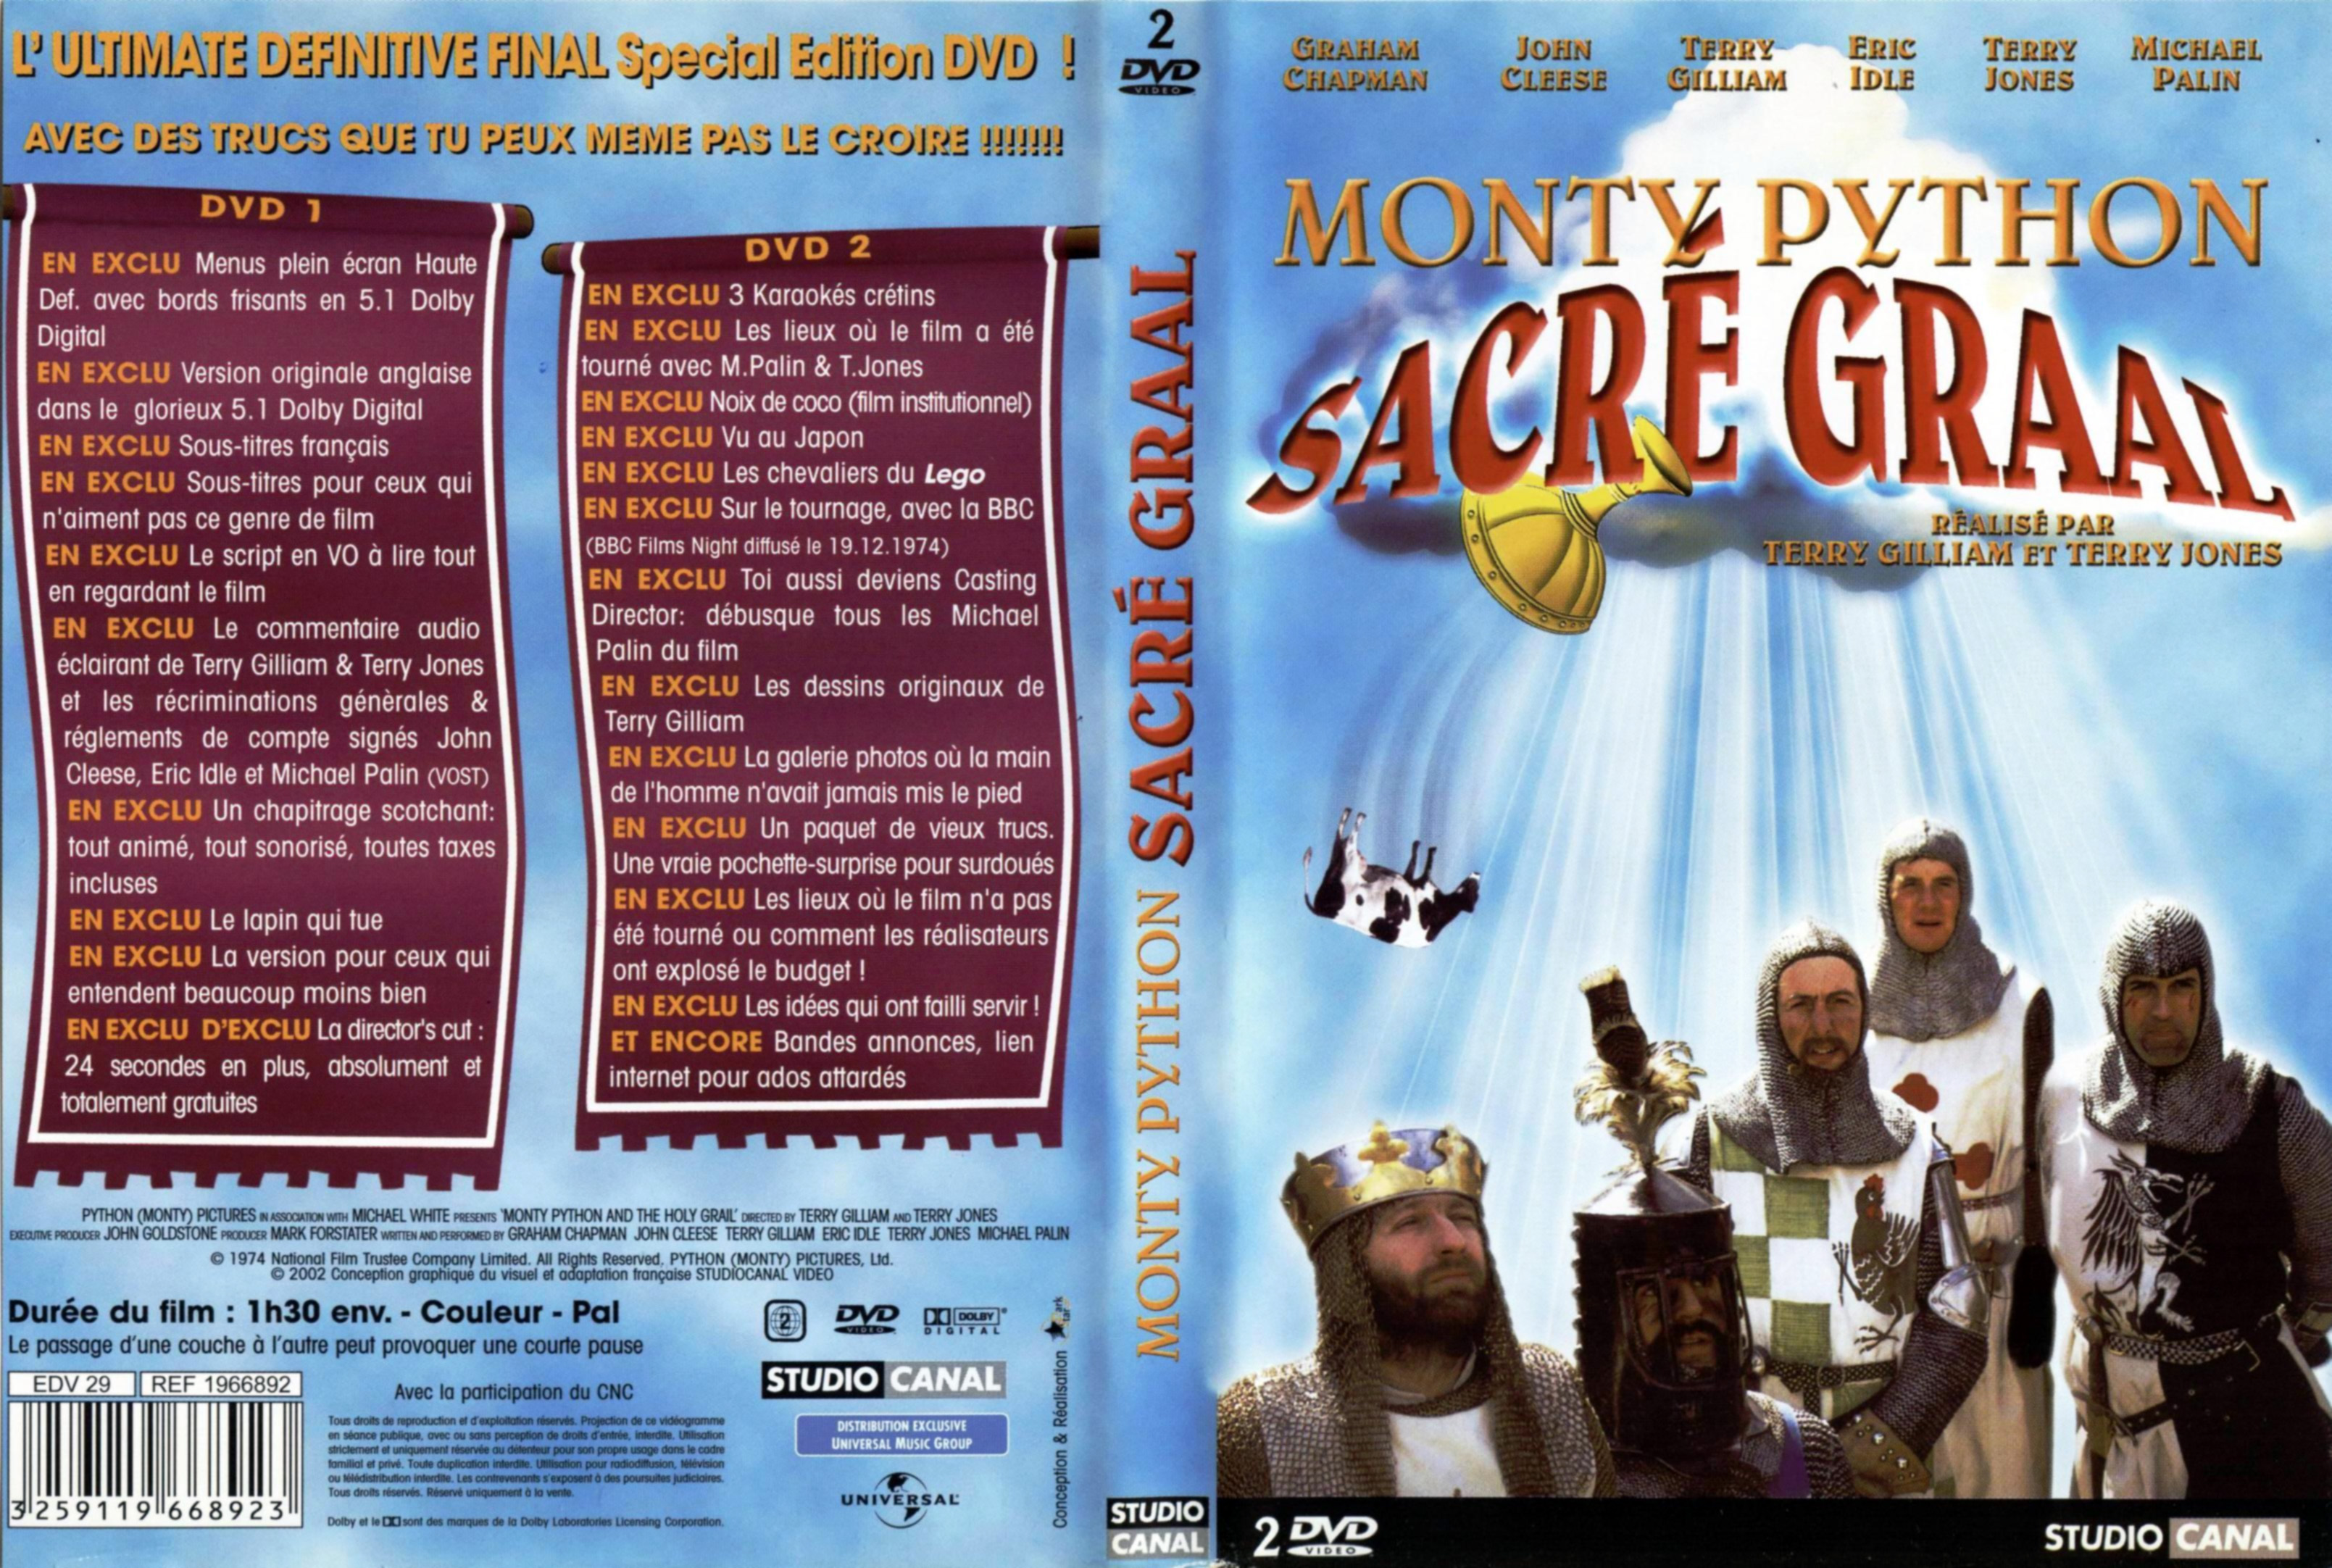 Jaquette DVD Monty Python - Sacr Graal